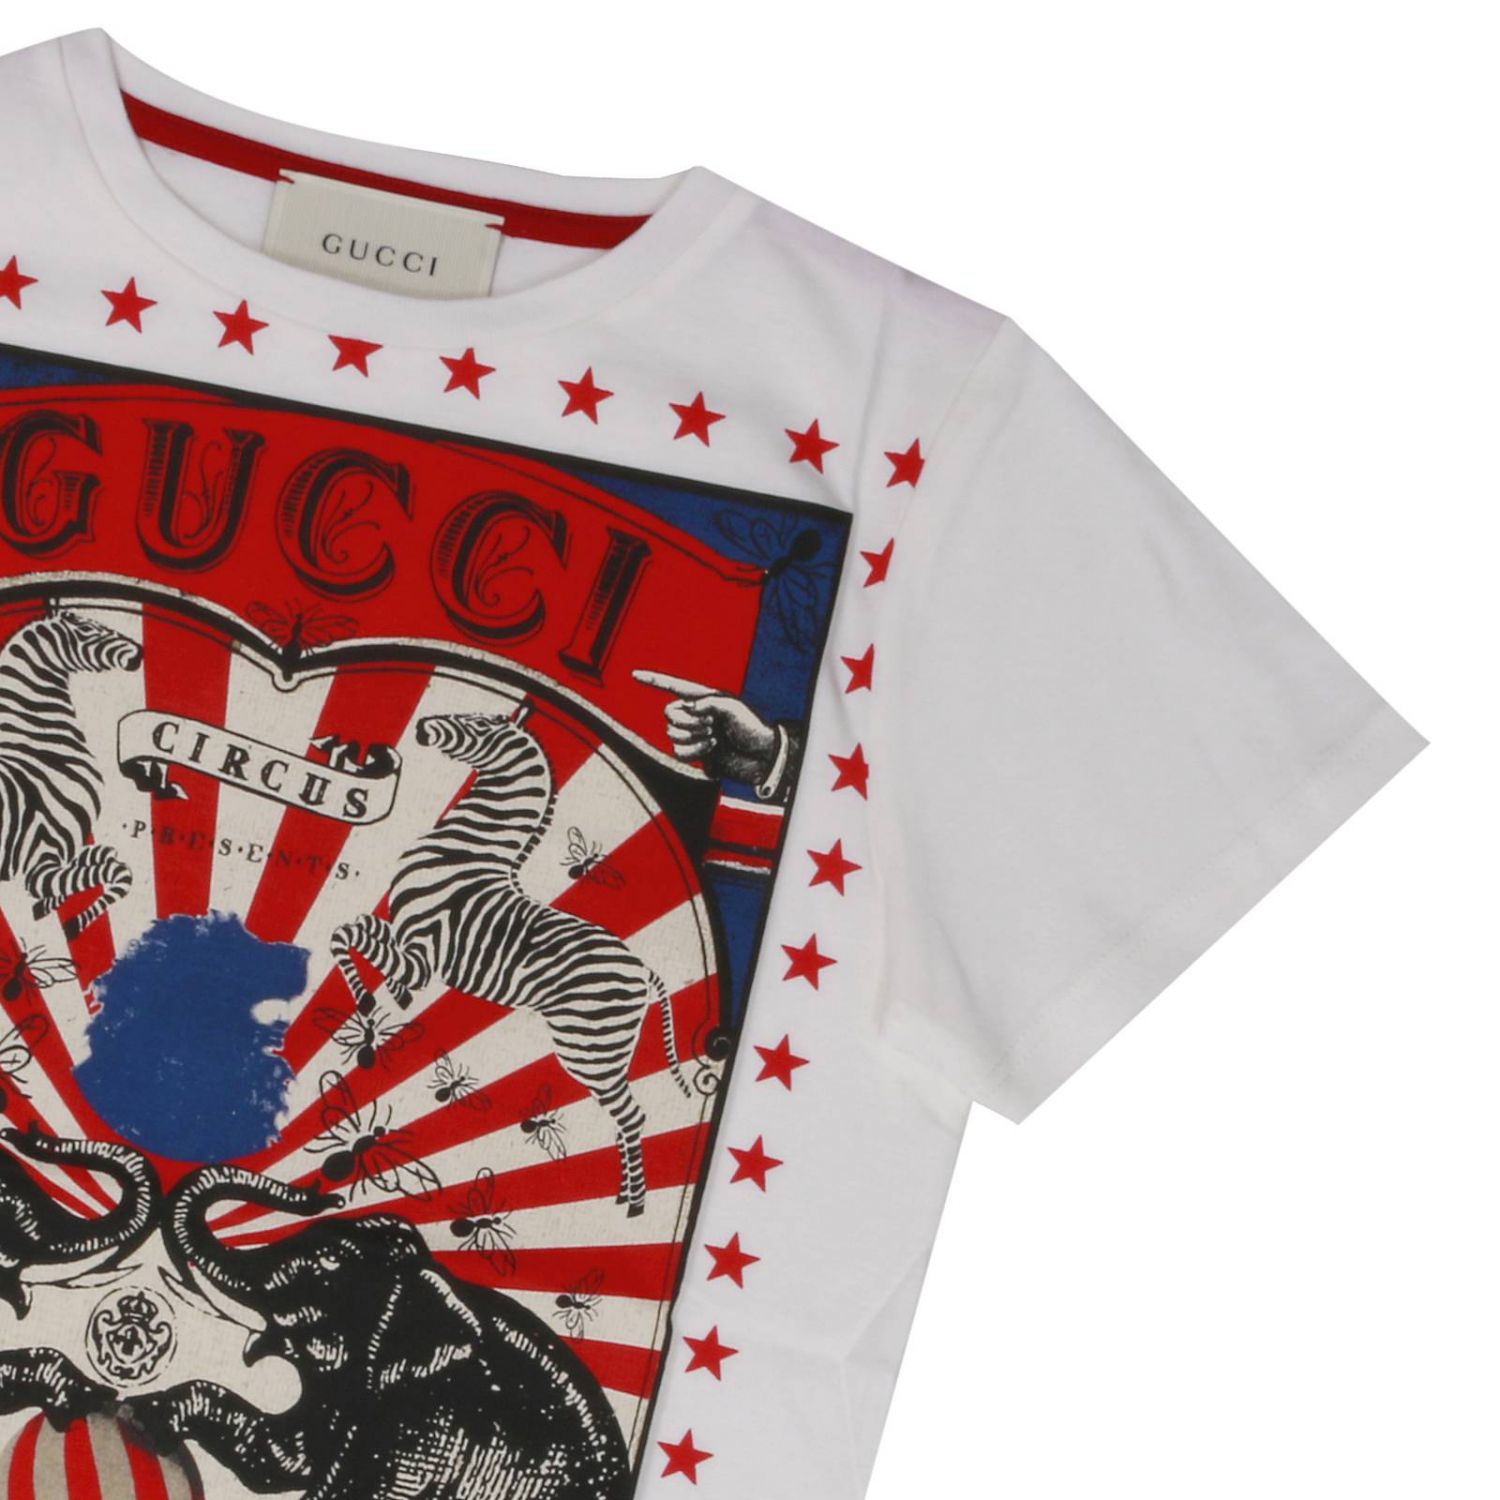 gucci circus t shirt, OFF 78%,Cheap price!